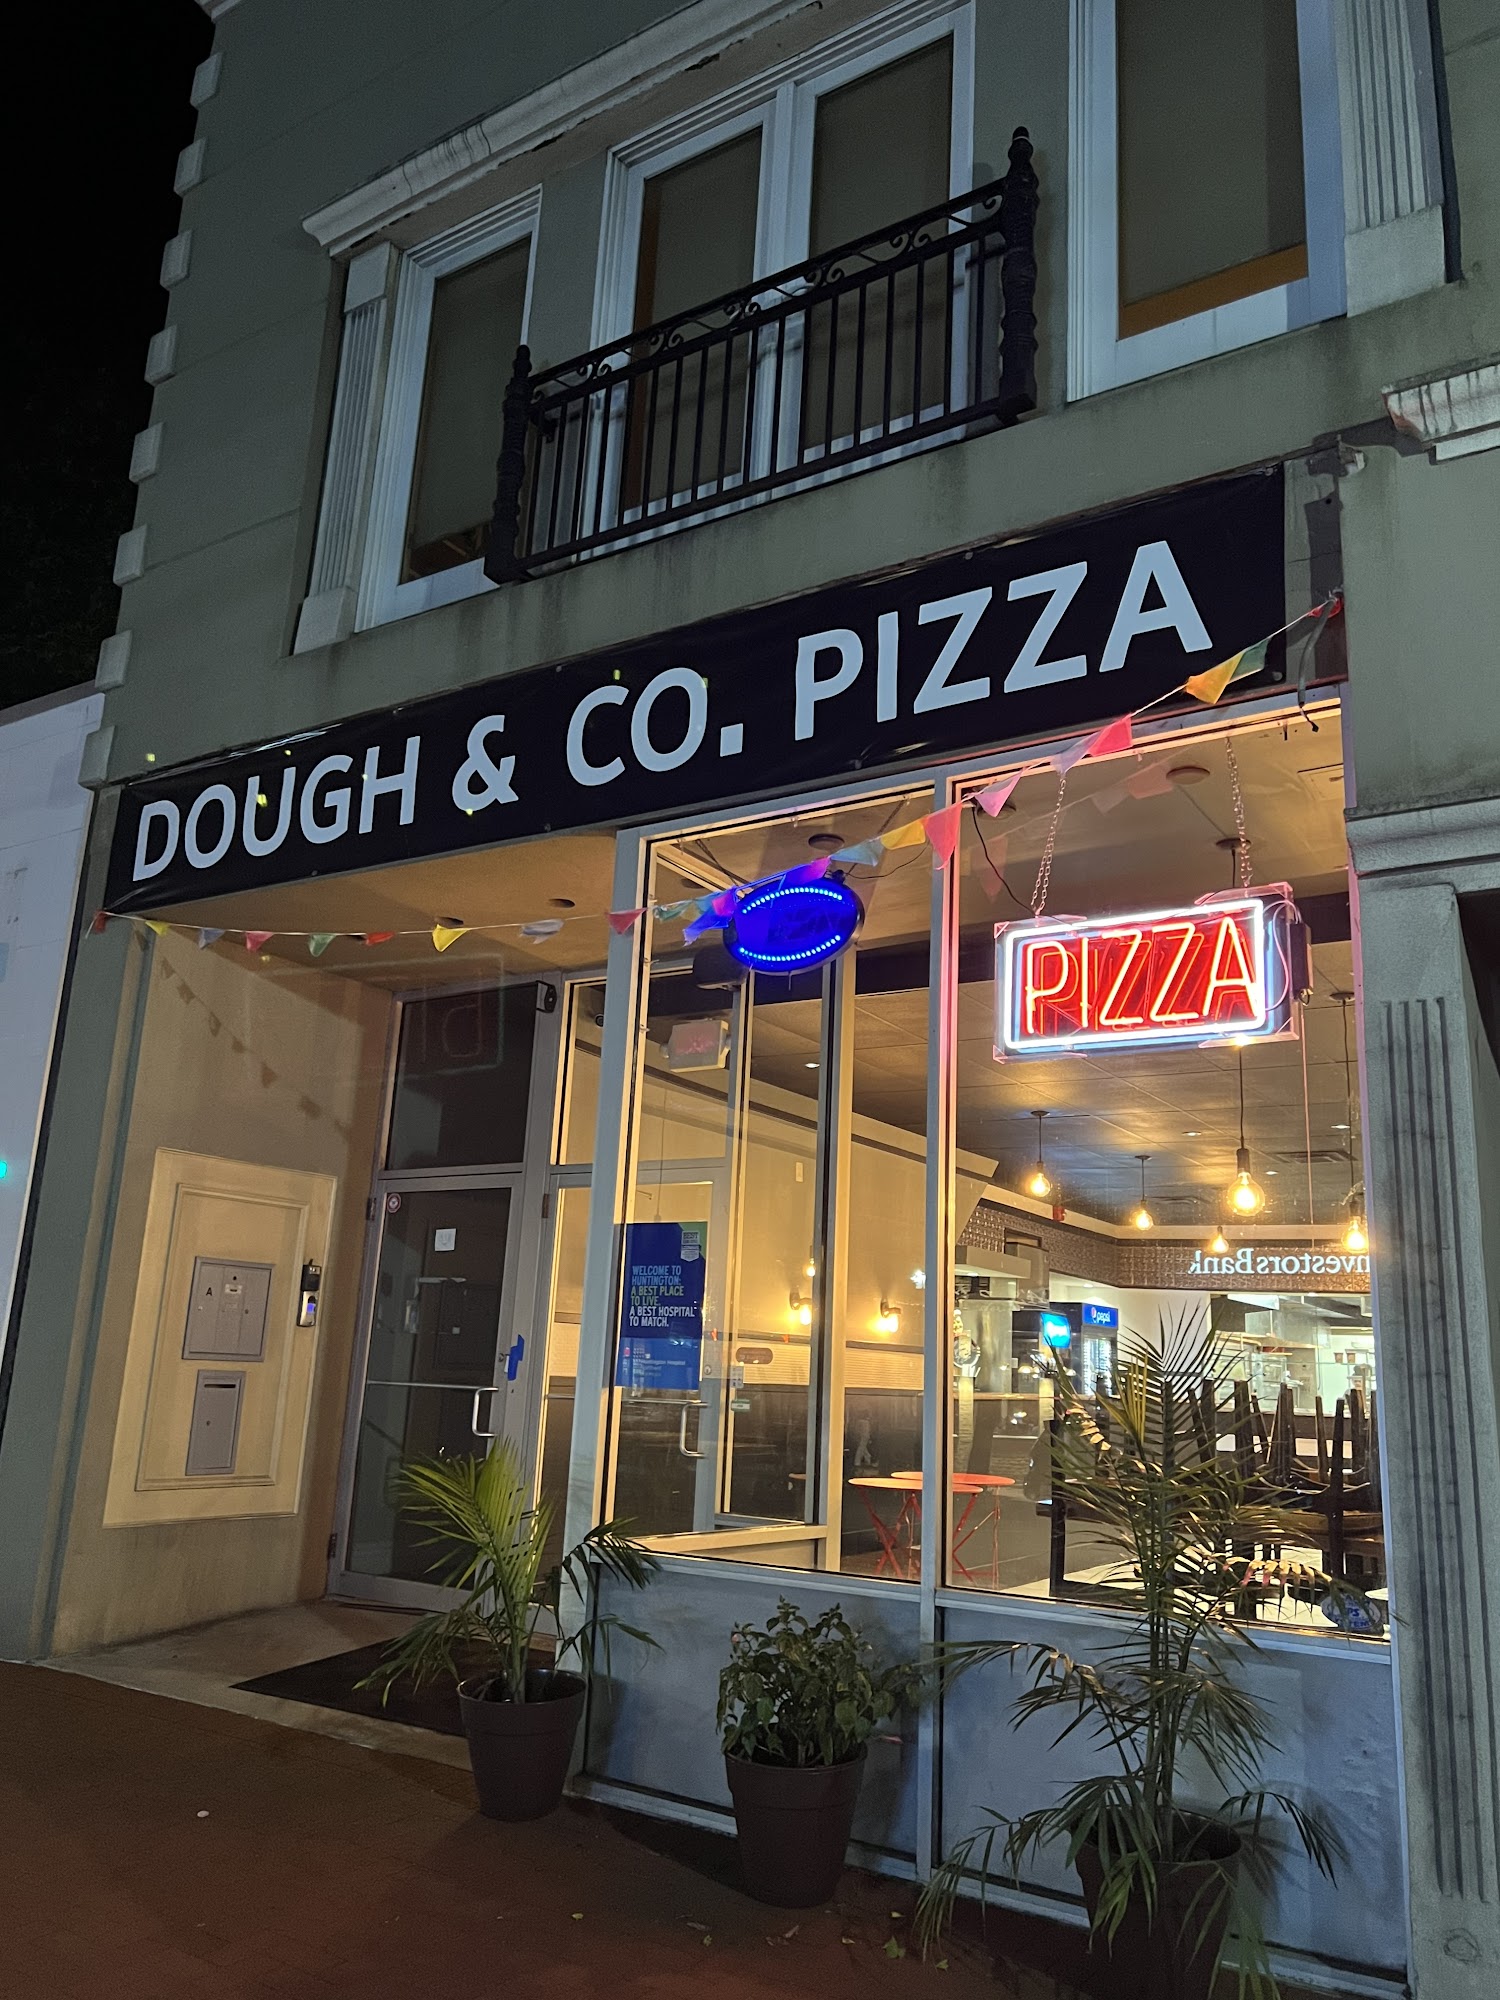 Dough & Co. Pizza